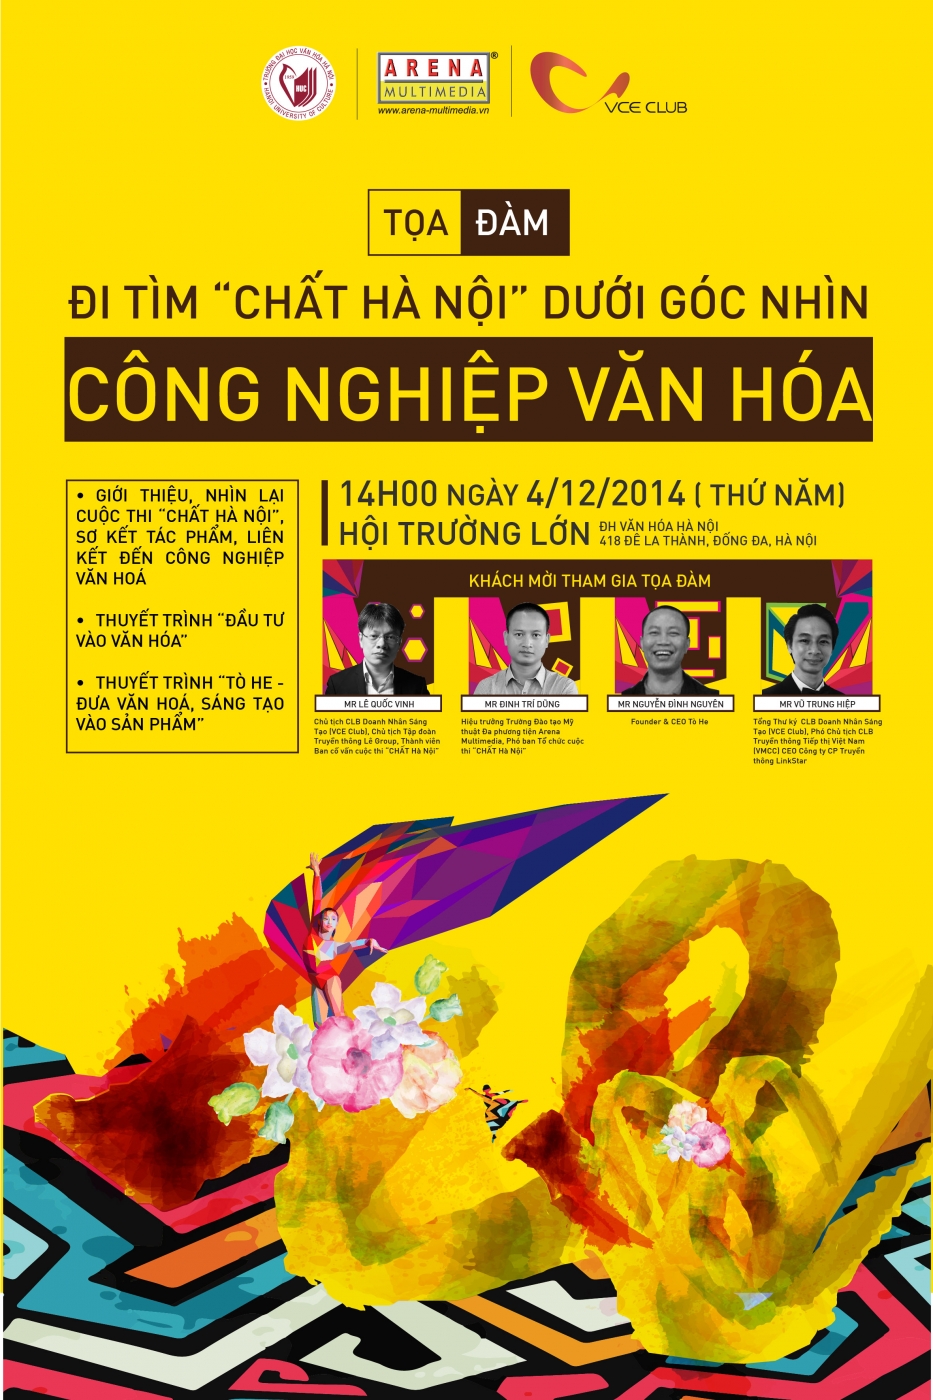 cong-nghiep-van-hoa-arena-multimedia